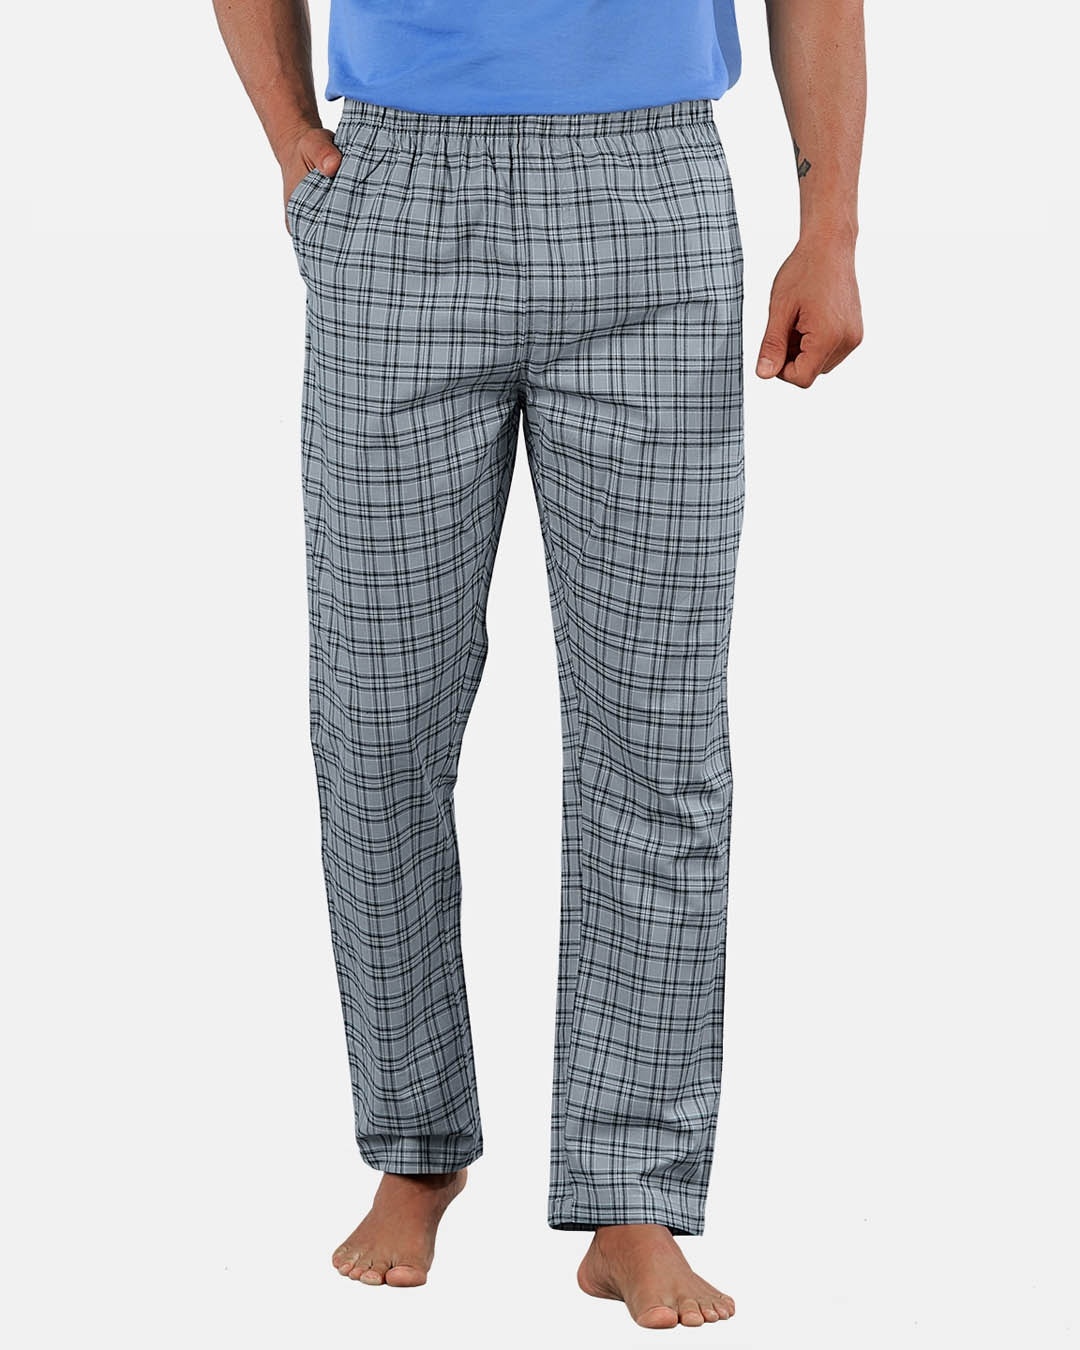 Shop Super Combed Cotton Checkered Pyjama For Men (Pack Of 2)-Design